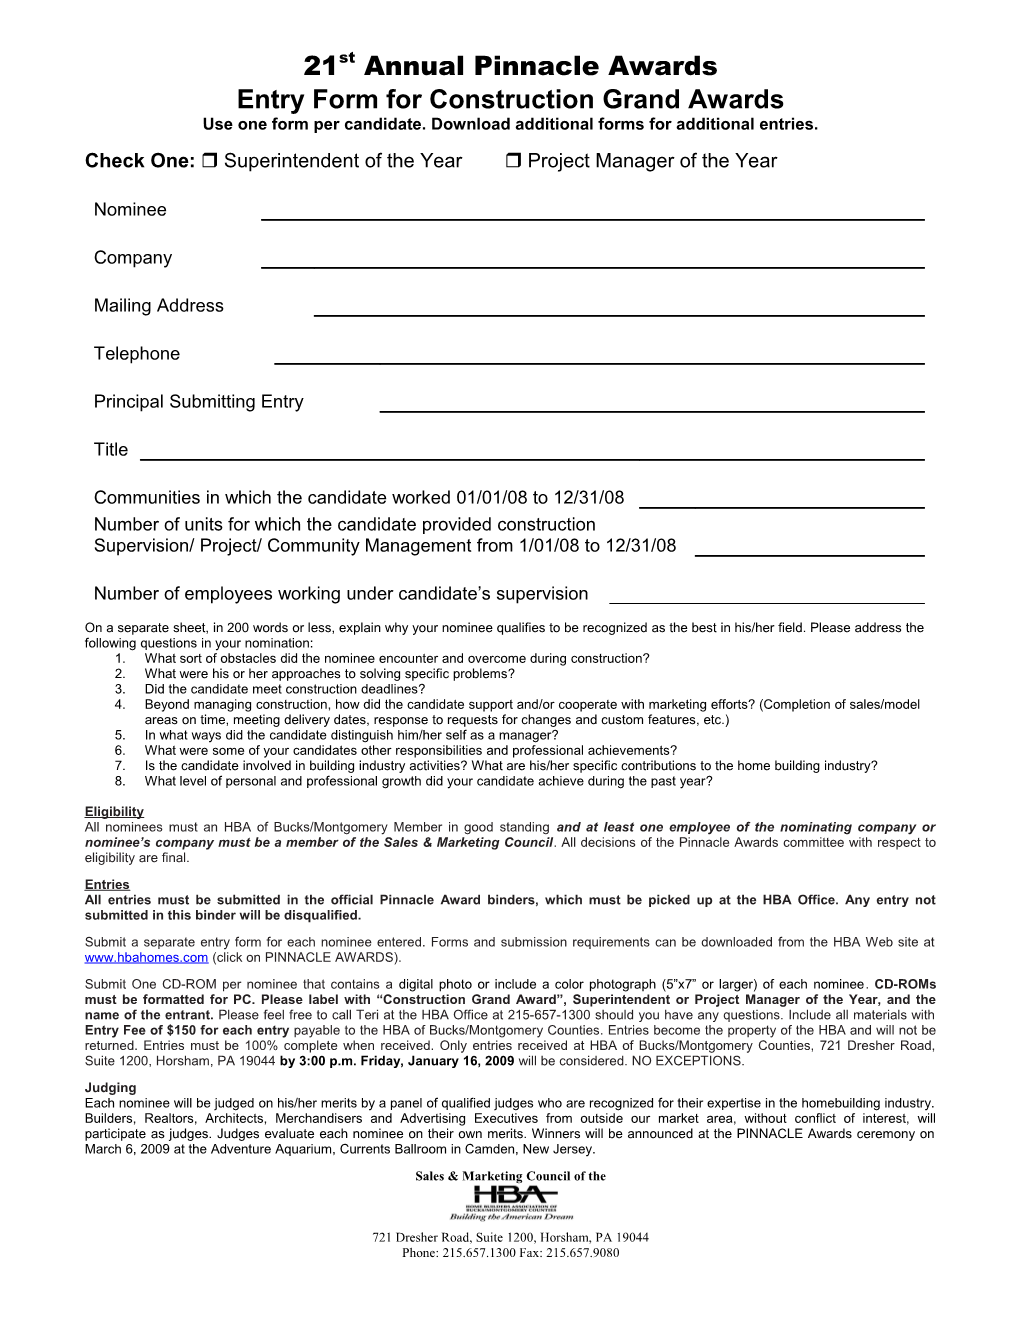 2005 PINNACLE Entry Form CONSTRUCTION GRAND AWARDS